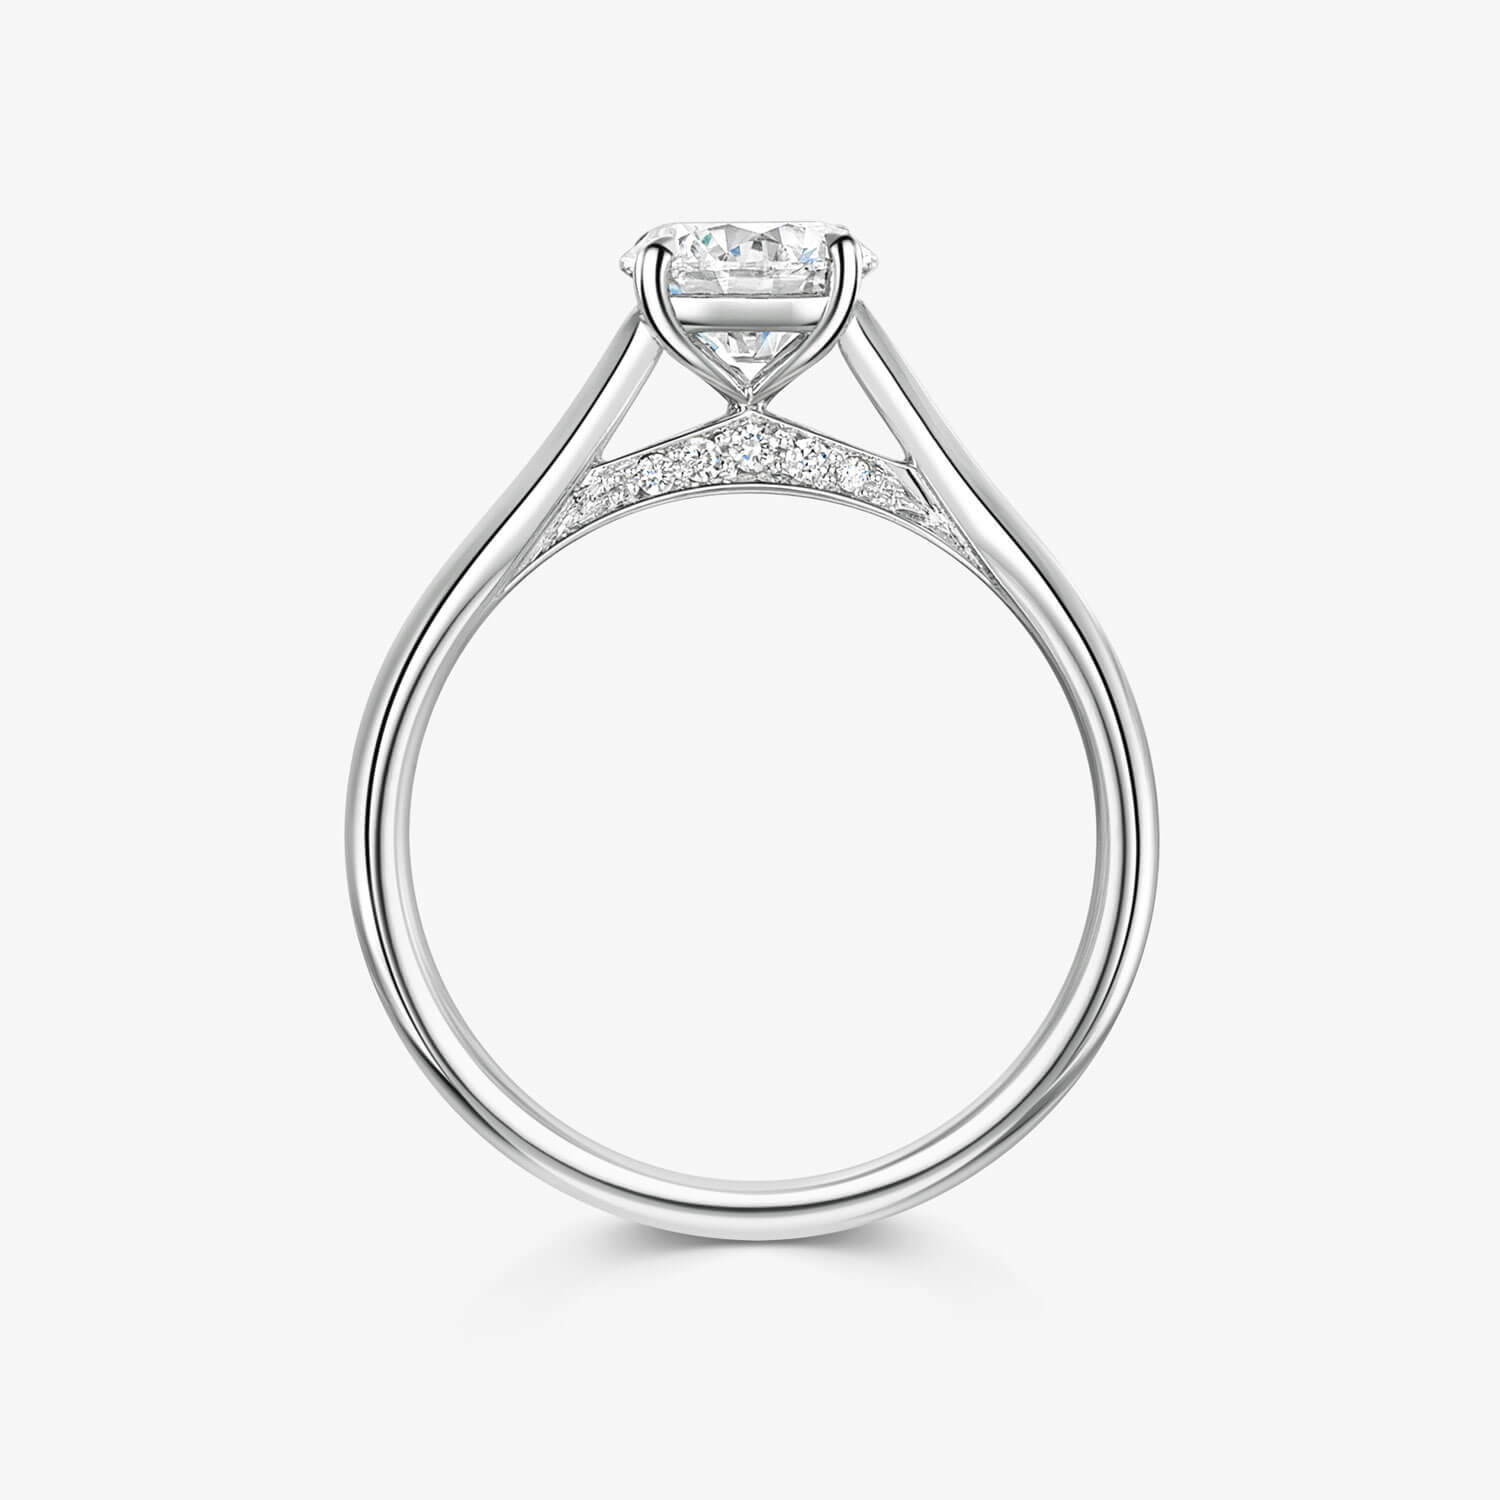 Round Brilliant Diamond Engagement Ring With Hidden Diamonds